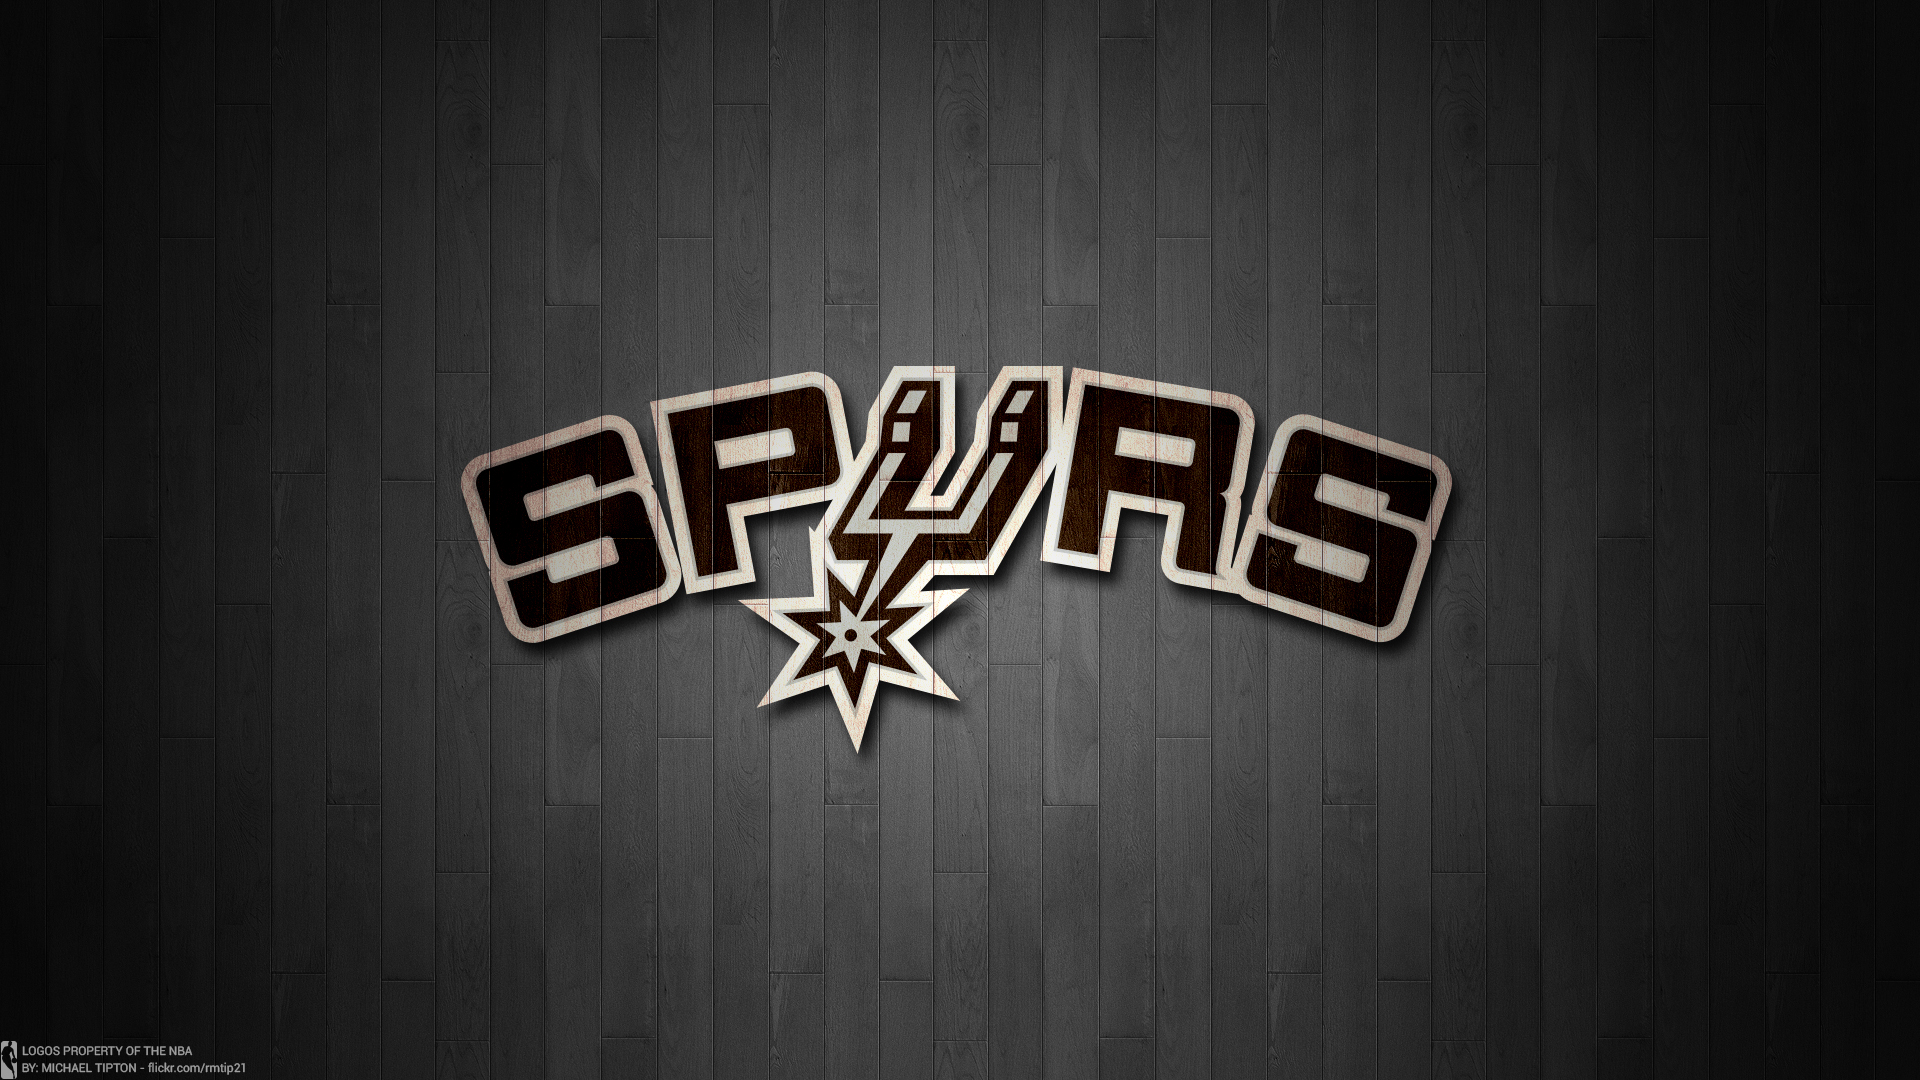 San Antonio Spurs Logo by Michael Tipton